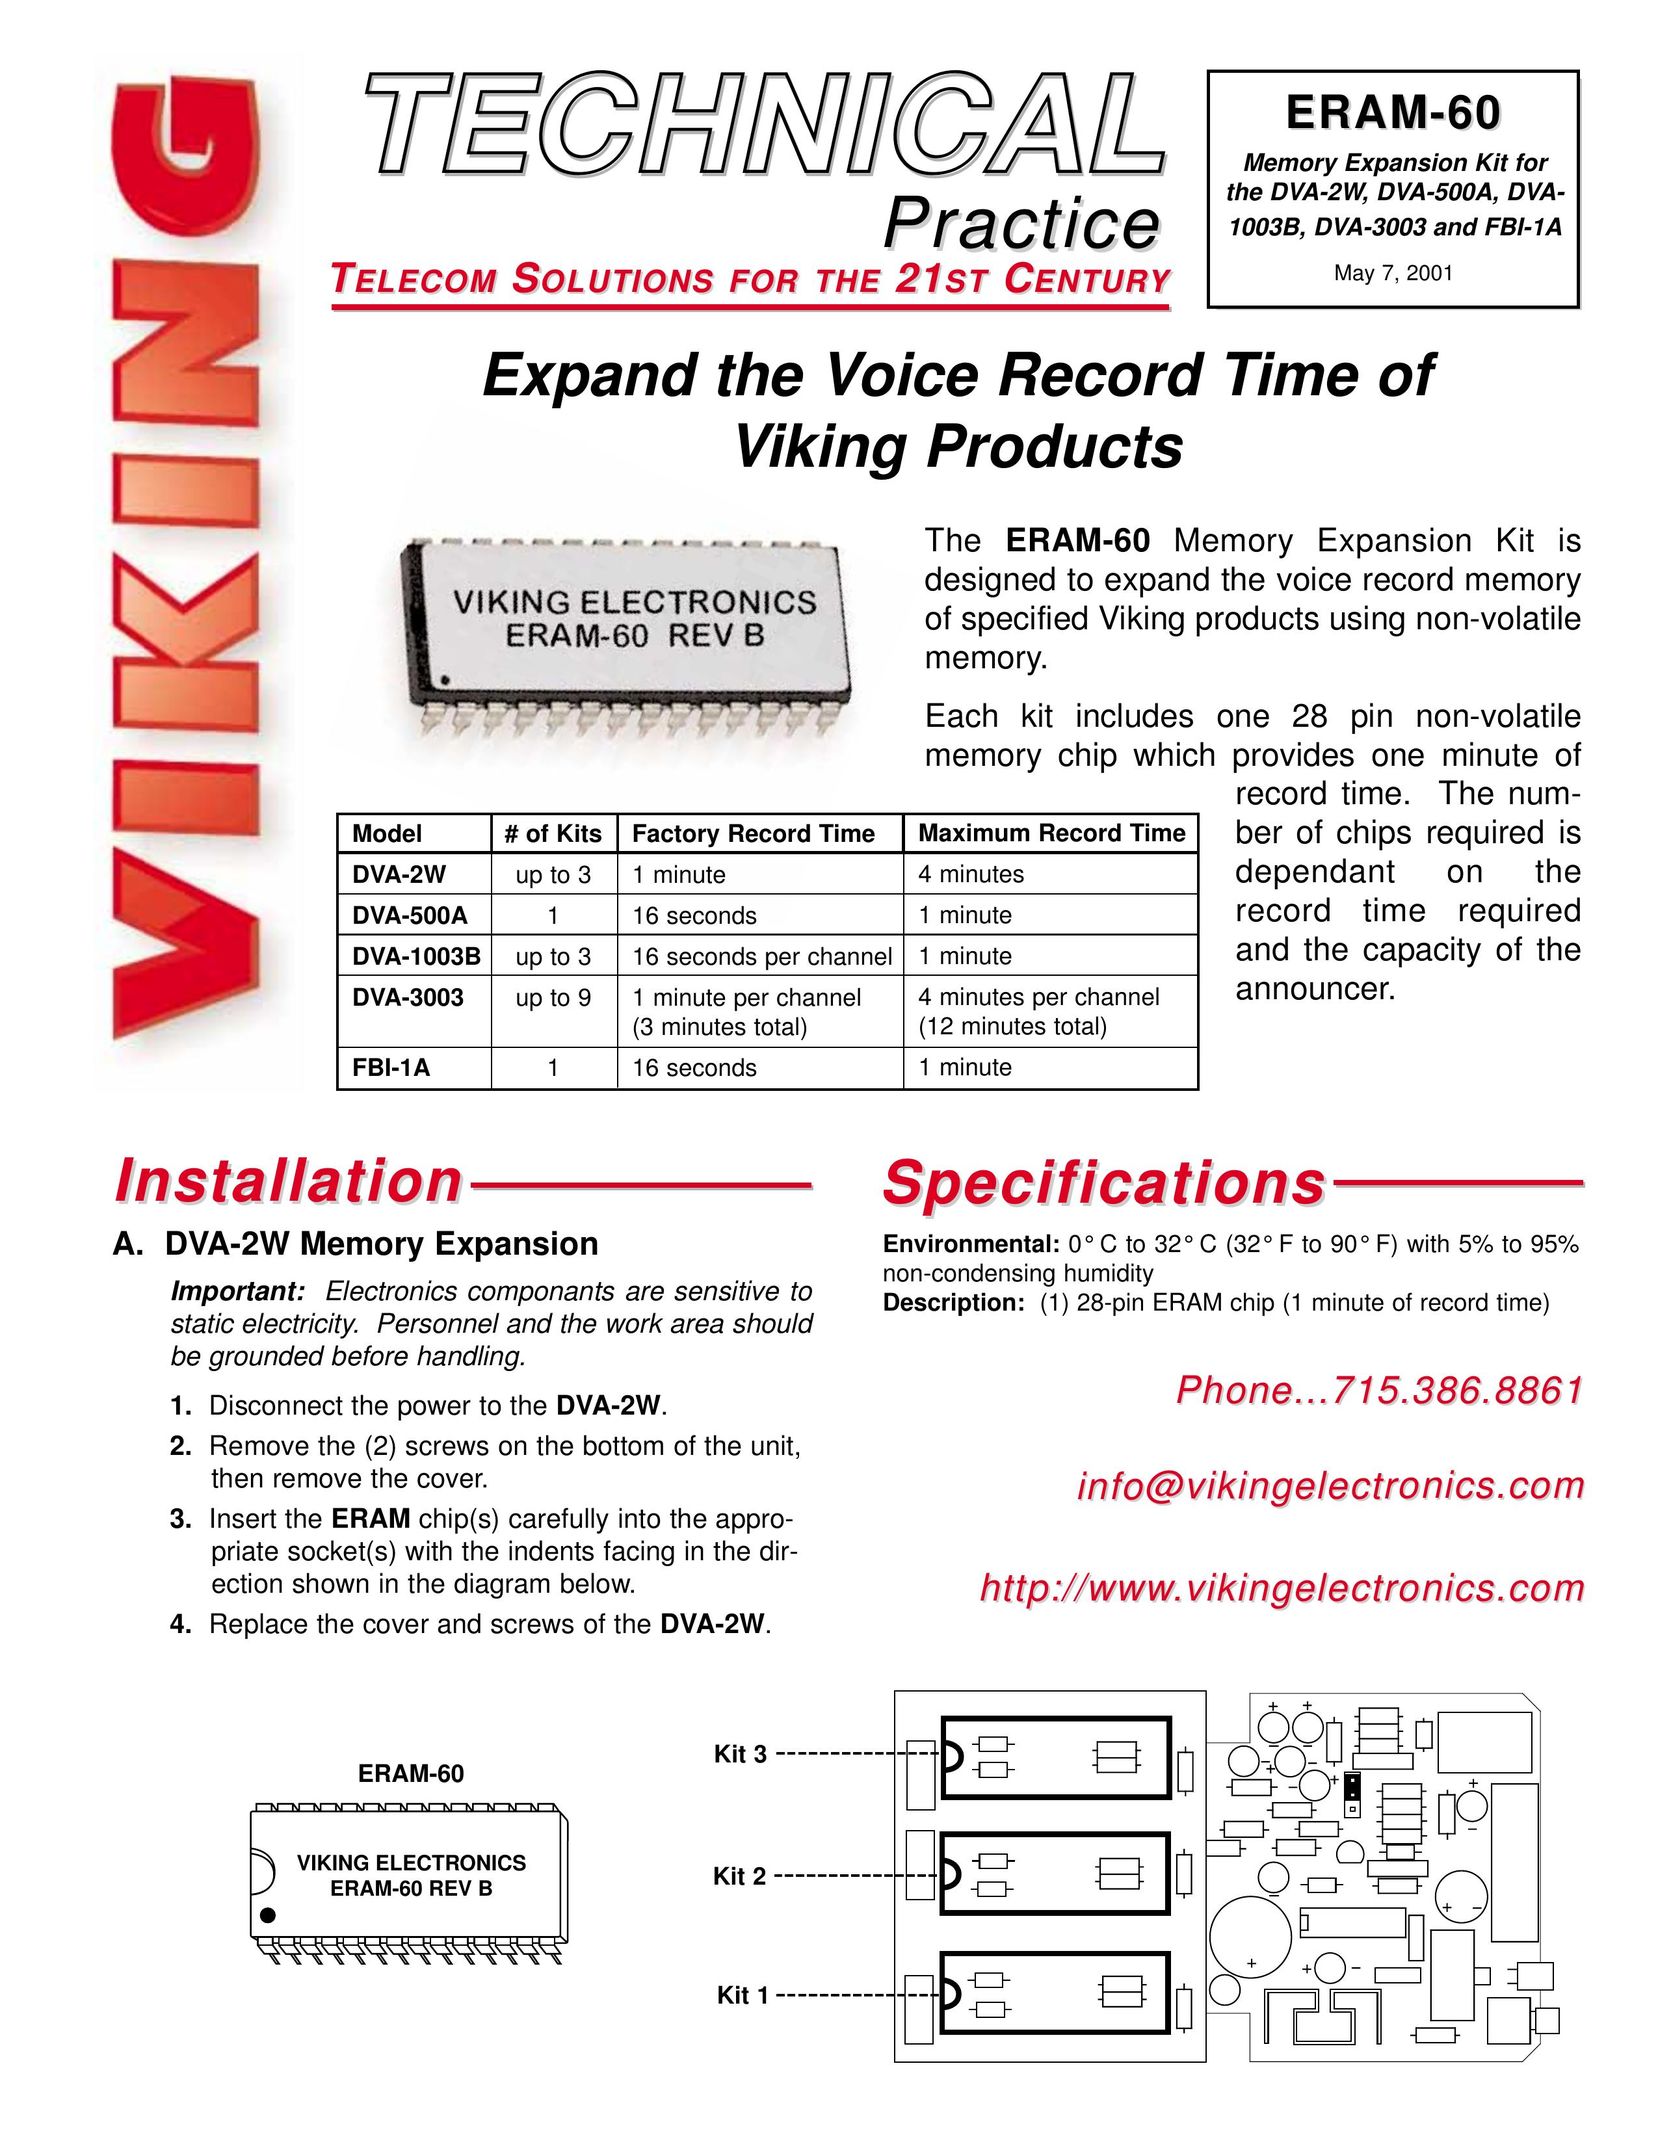 Viking Electronics DVA- 1003B Video Gaming Accessories User Manual (Page 1)